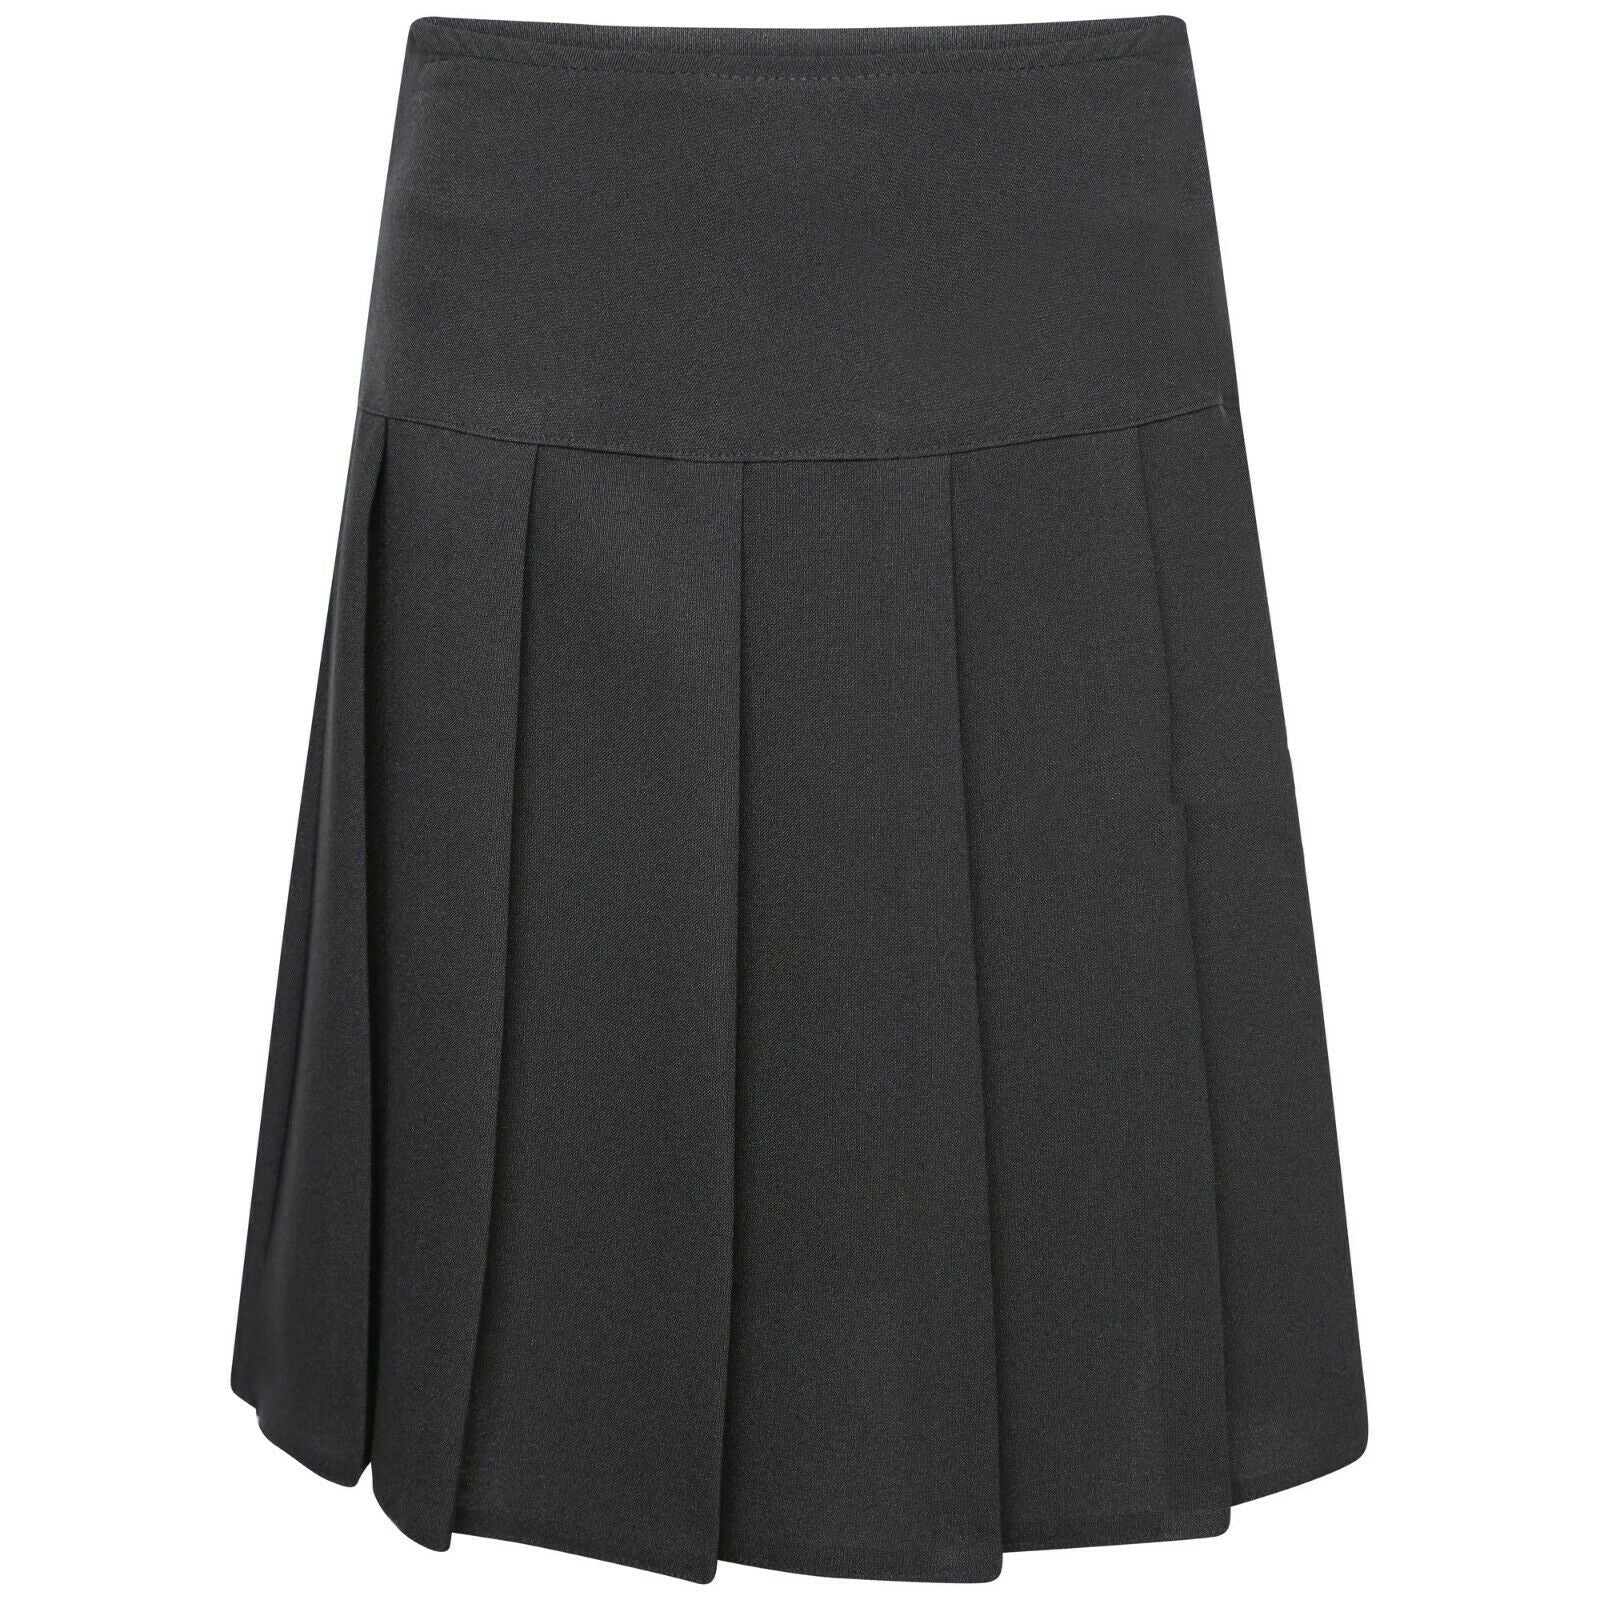 Black School Uniform All Round Knife Pleated Girls Skirt with Side Zip Closure Machine Washable